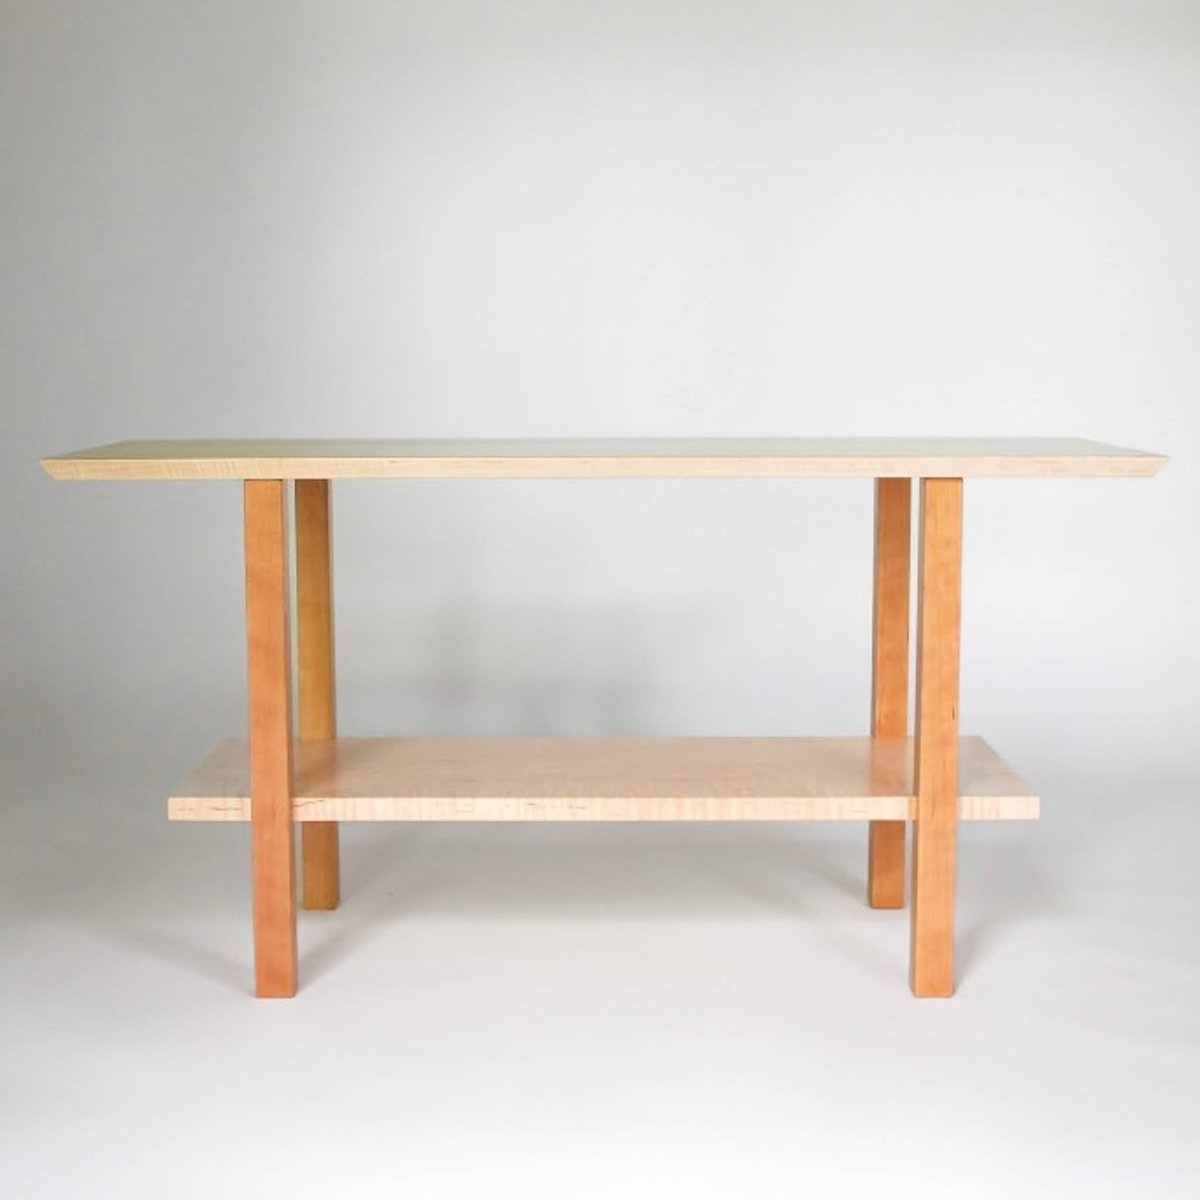 a minimalist entry bench with shelf by Mokuzai Furniture